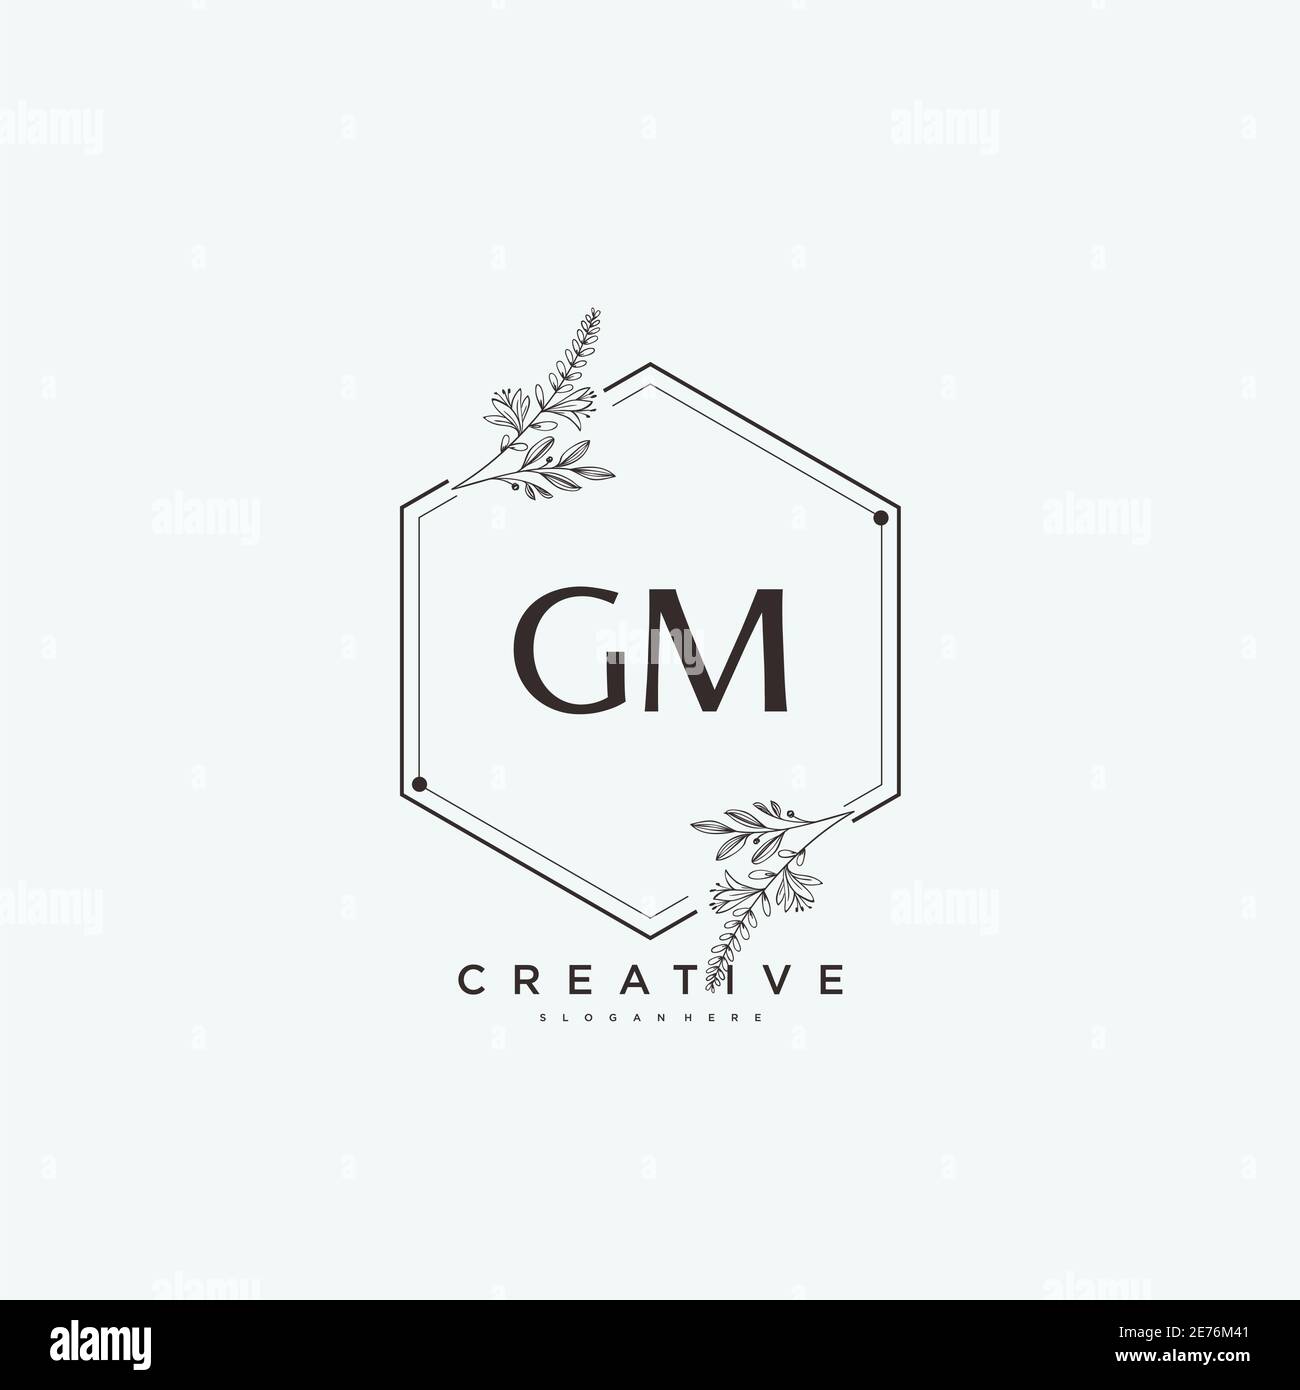 Letter G M logo design. creative minimal monochrome monogram